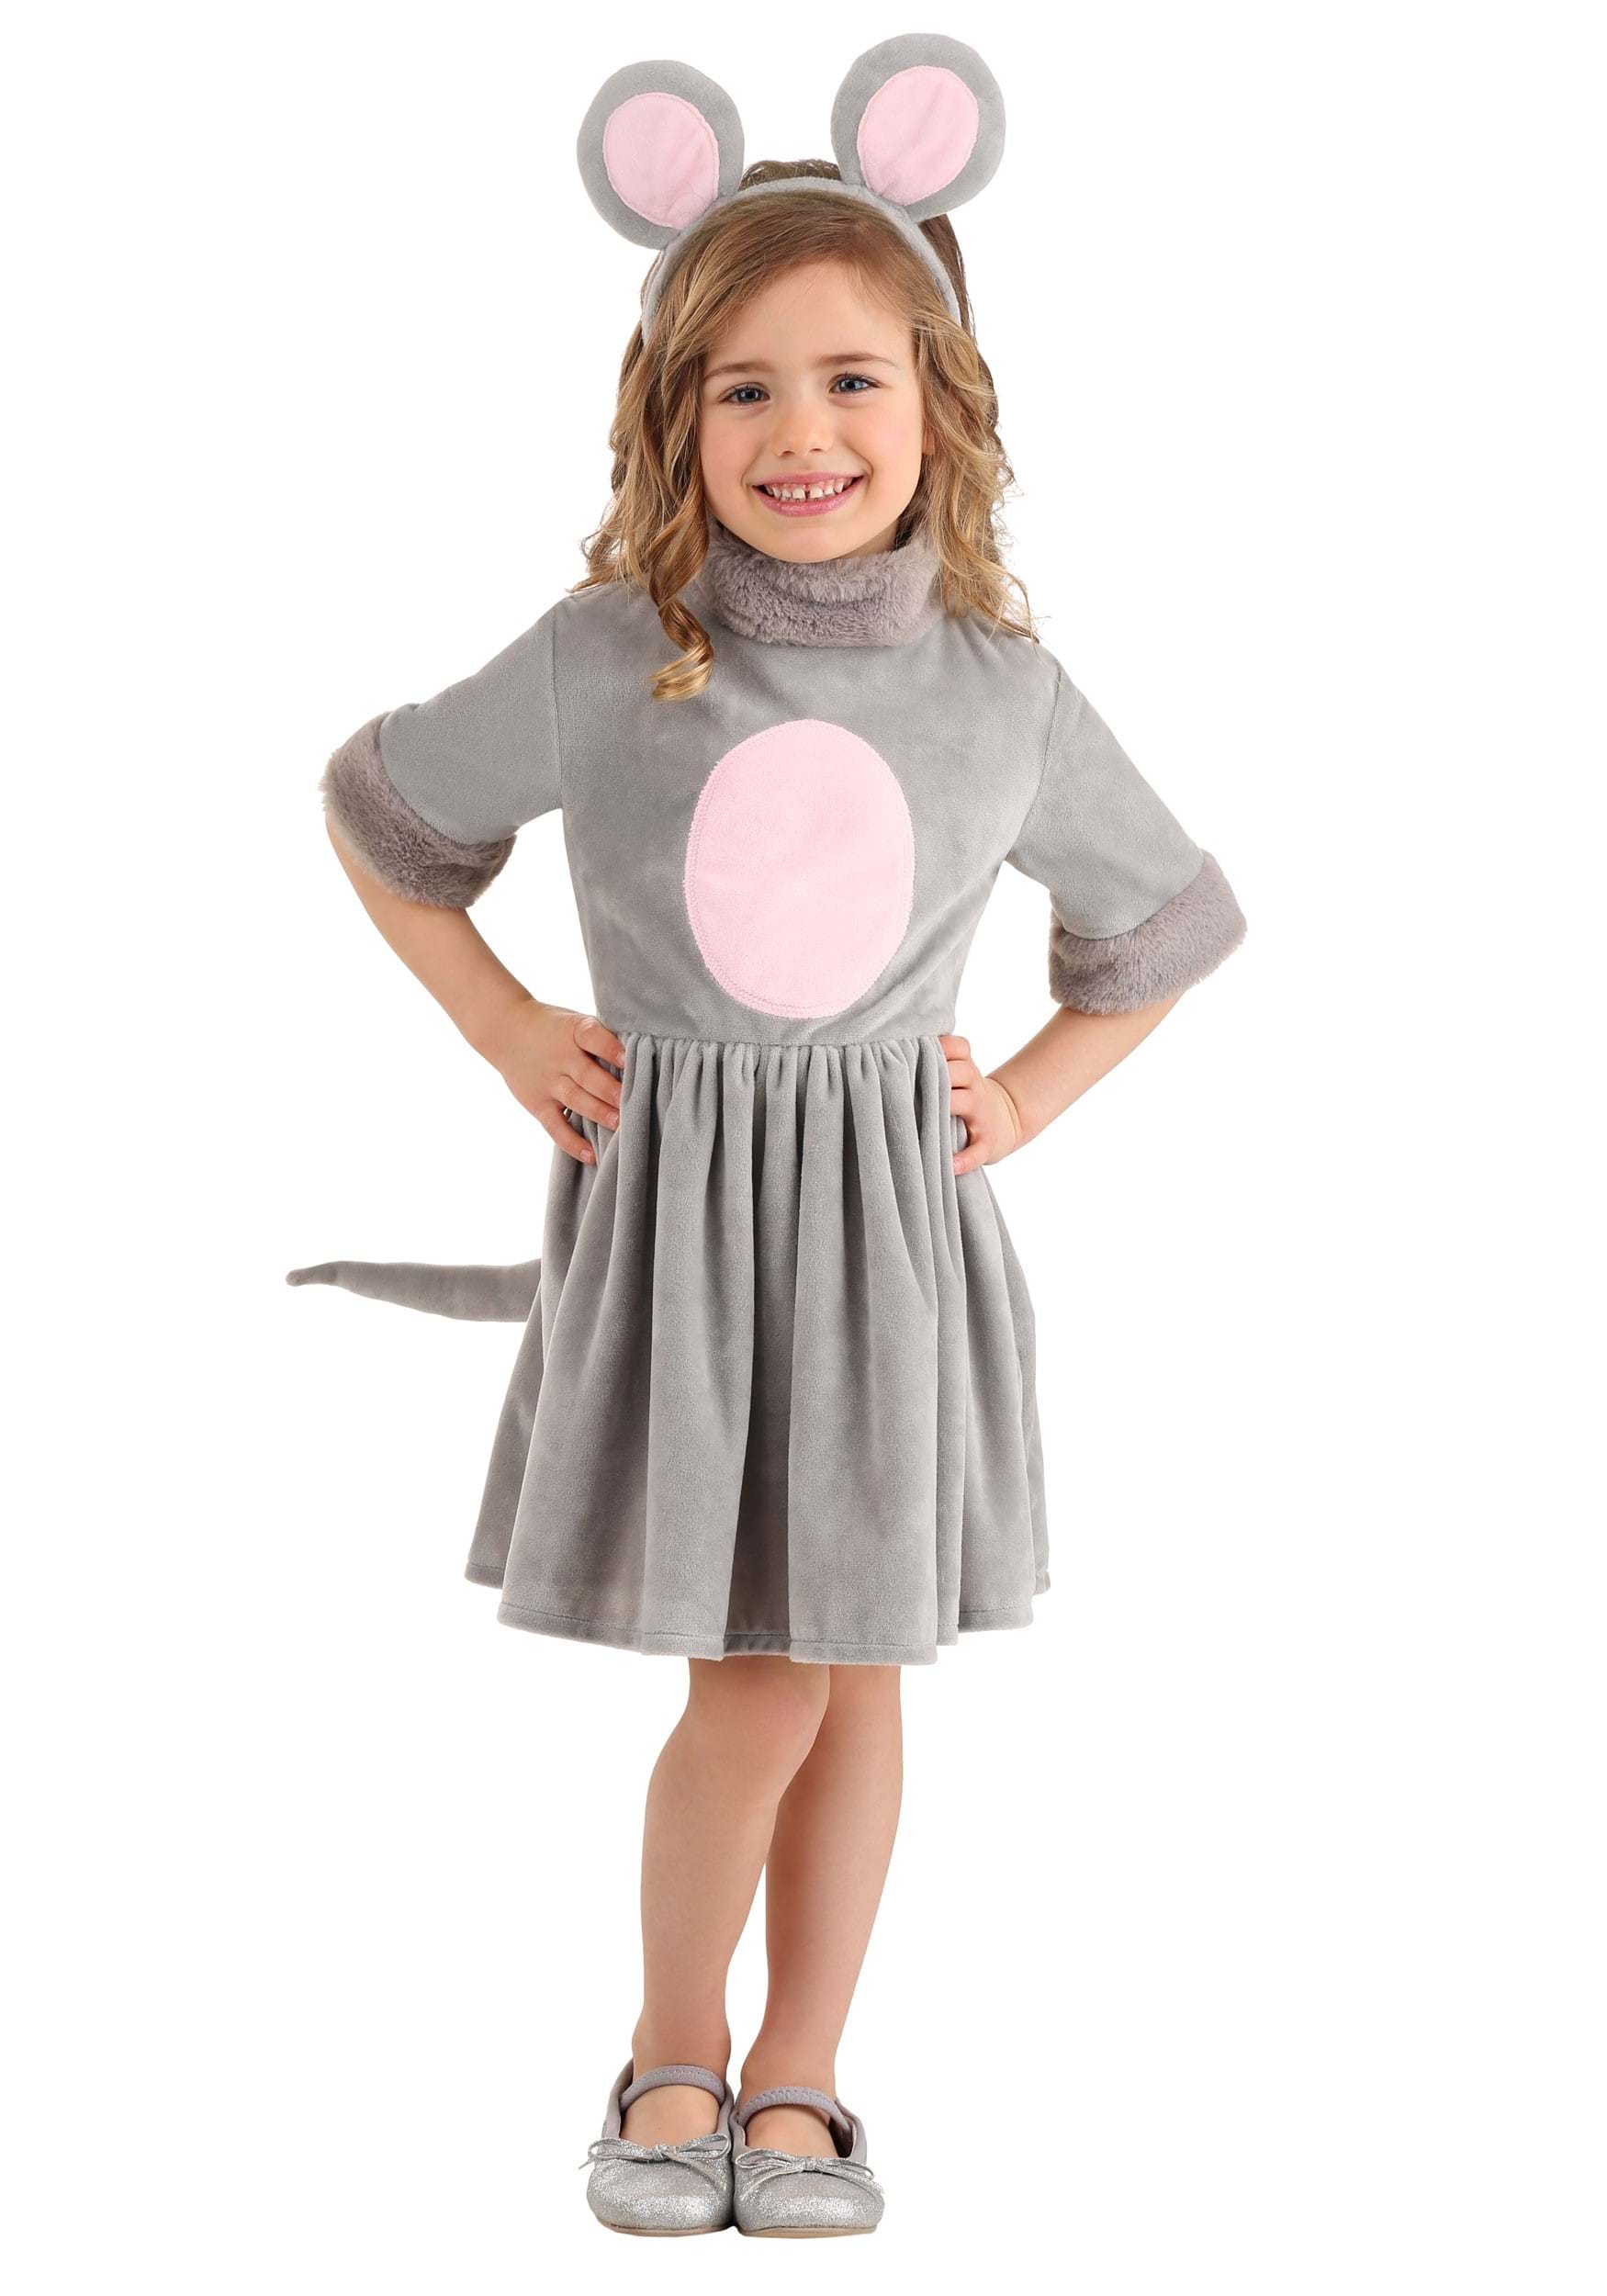 Photos - Fancy Dress Winsun Dress FUN Costumes Girl's Toddler Mouse Dress Costume Pink/Gray FUN1750TD 